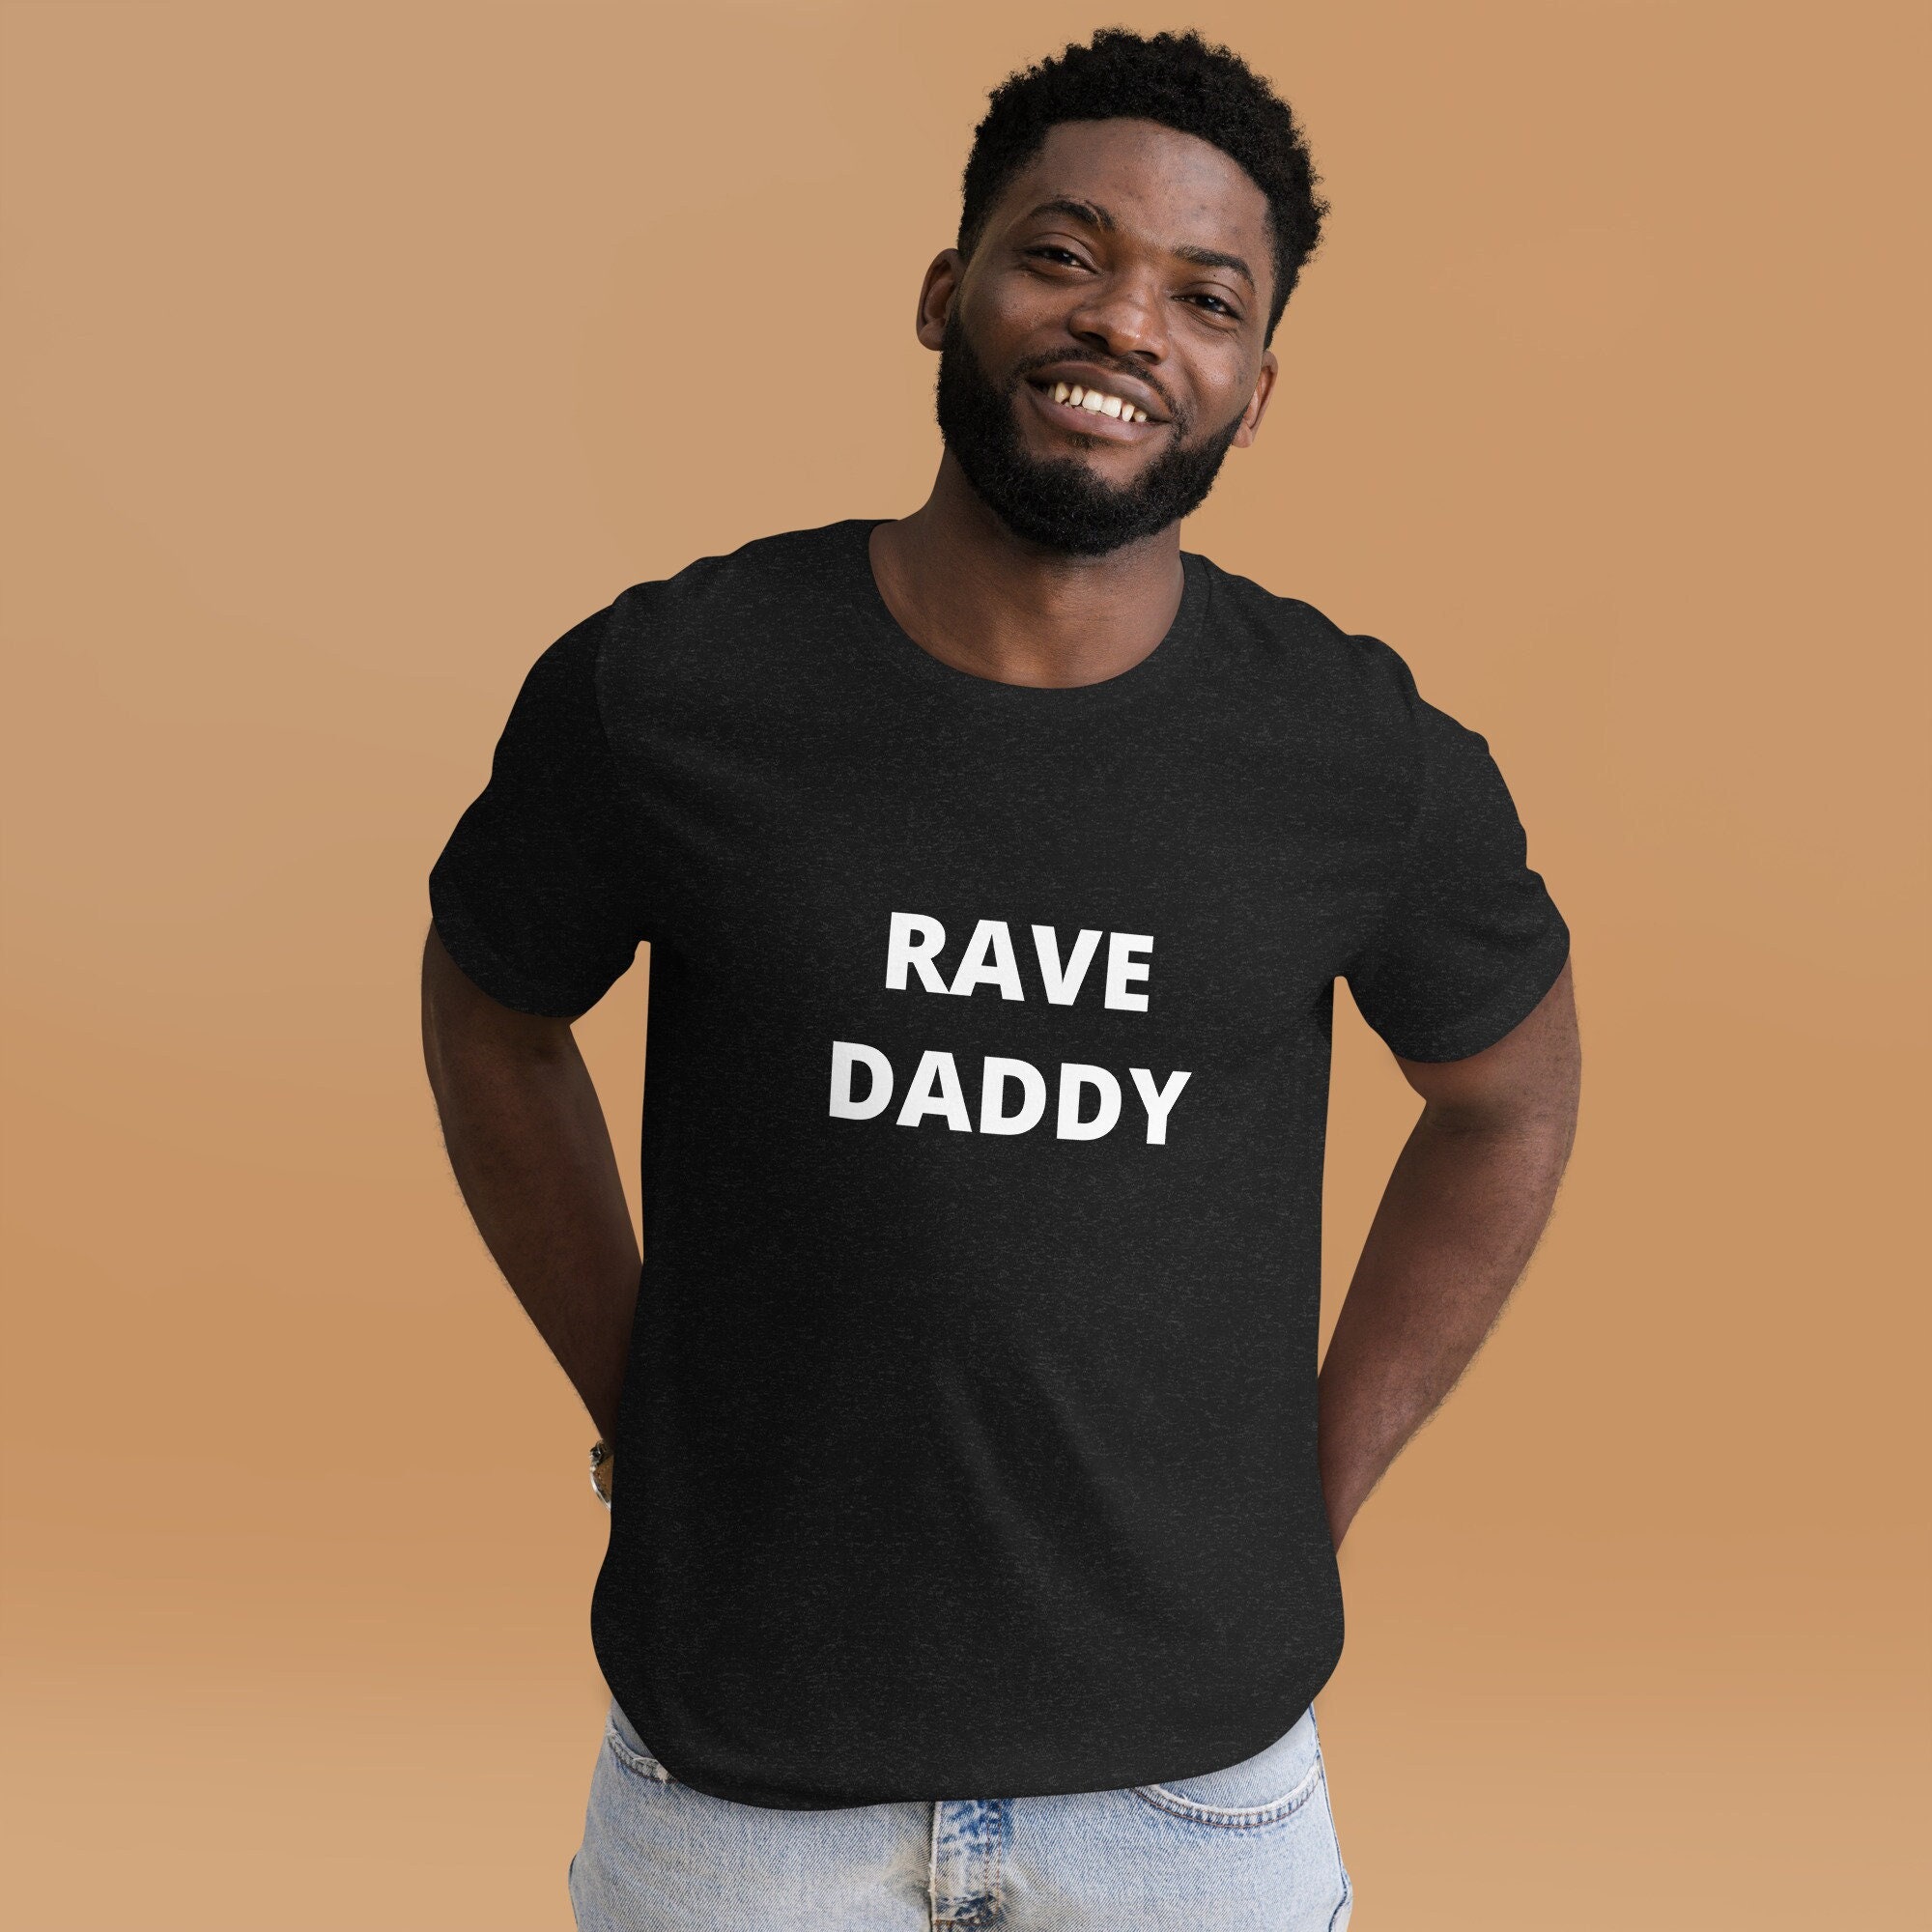 zonde Pech Doorzichtig Rave Daddy T-shirt Rave T Shirt Rave Shirts for Guys Rave - Etsy